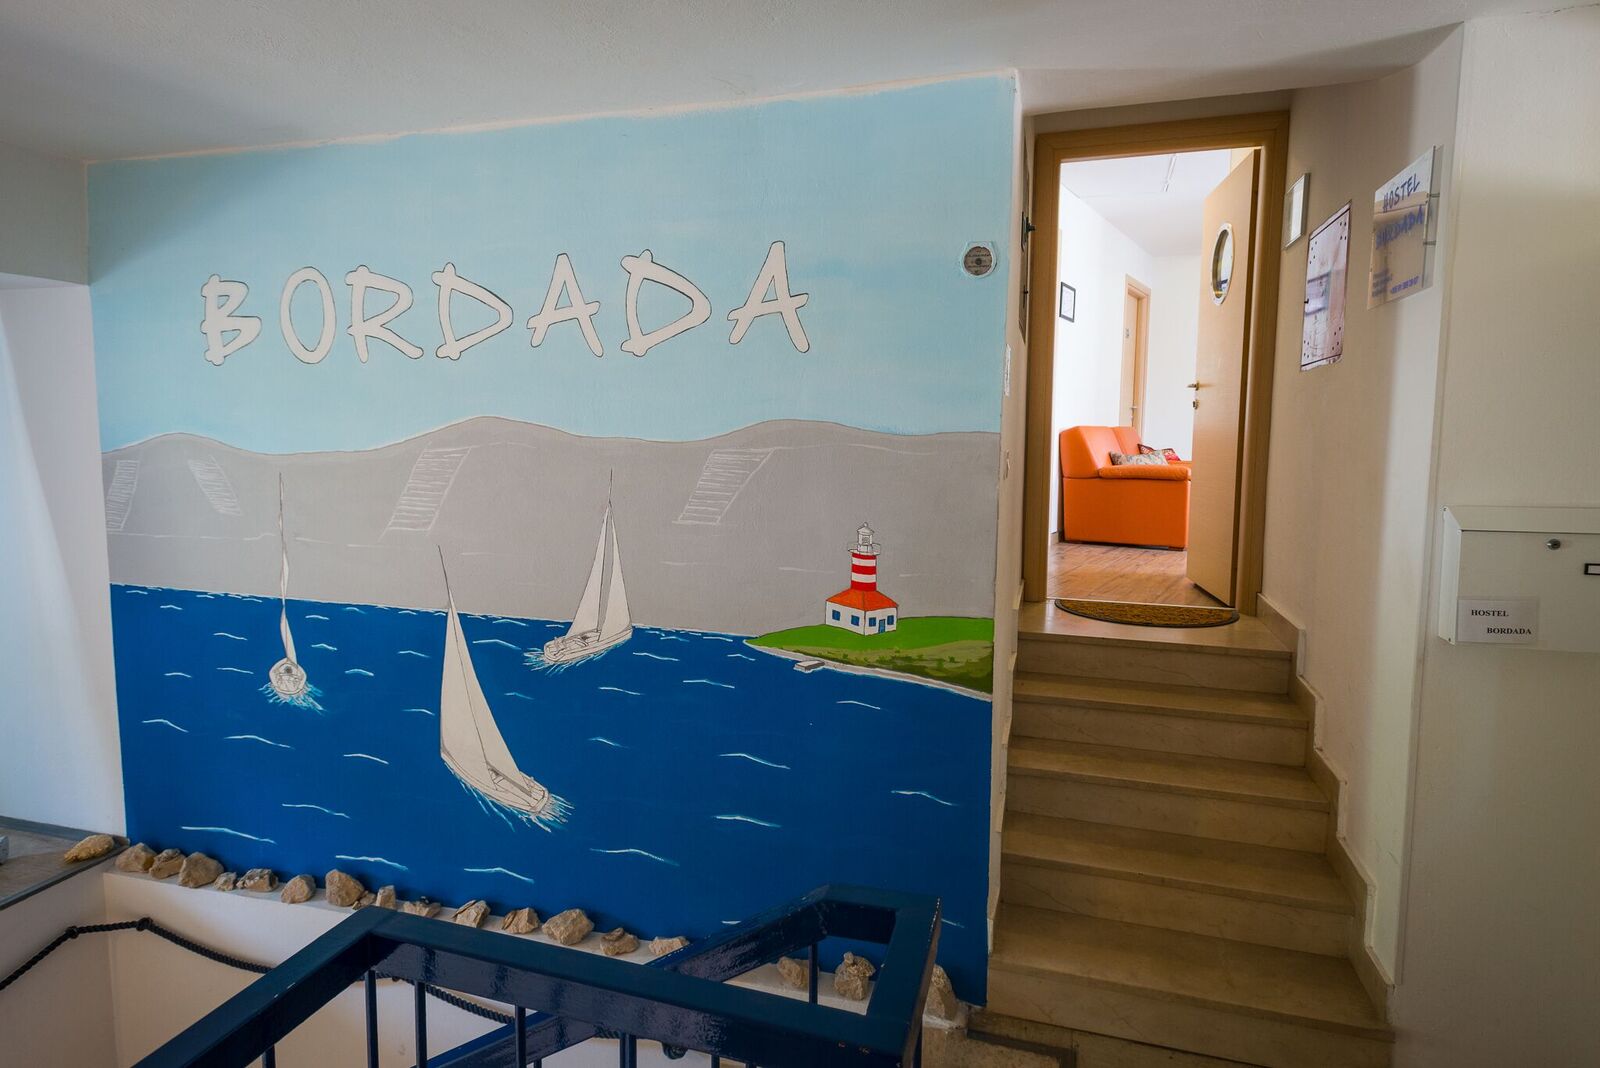 Hostel "Bordada" photo by Ranko Frka